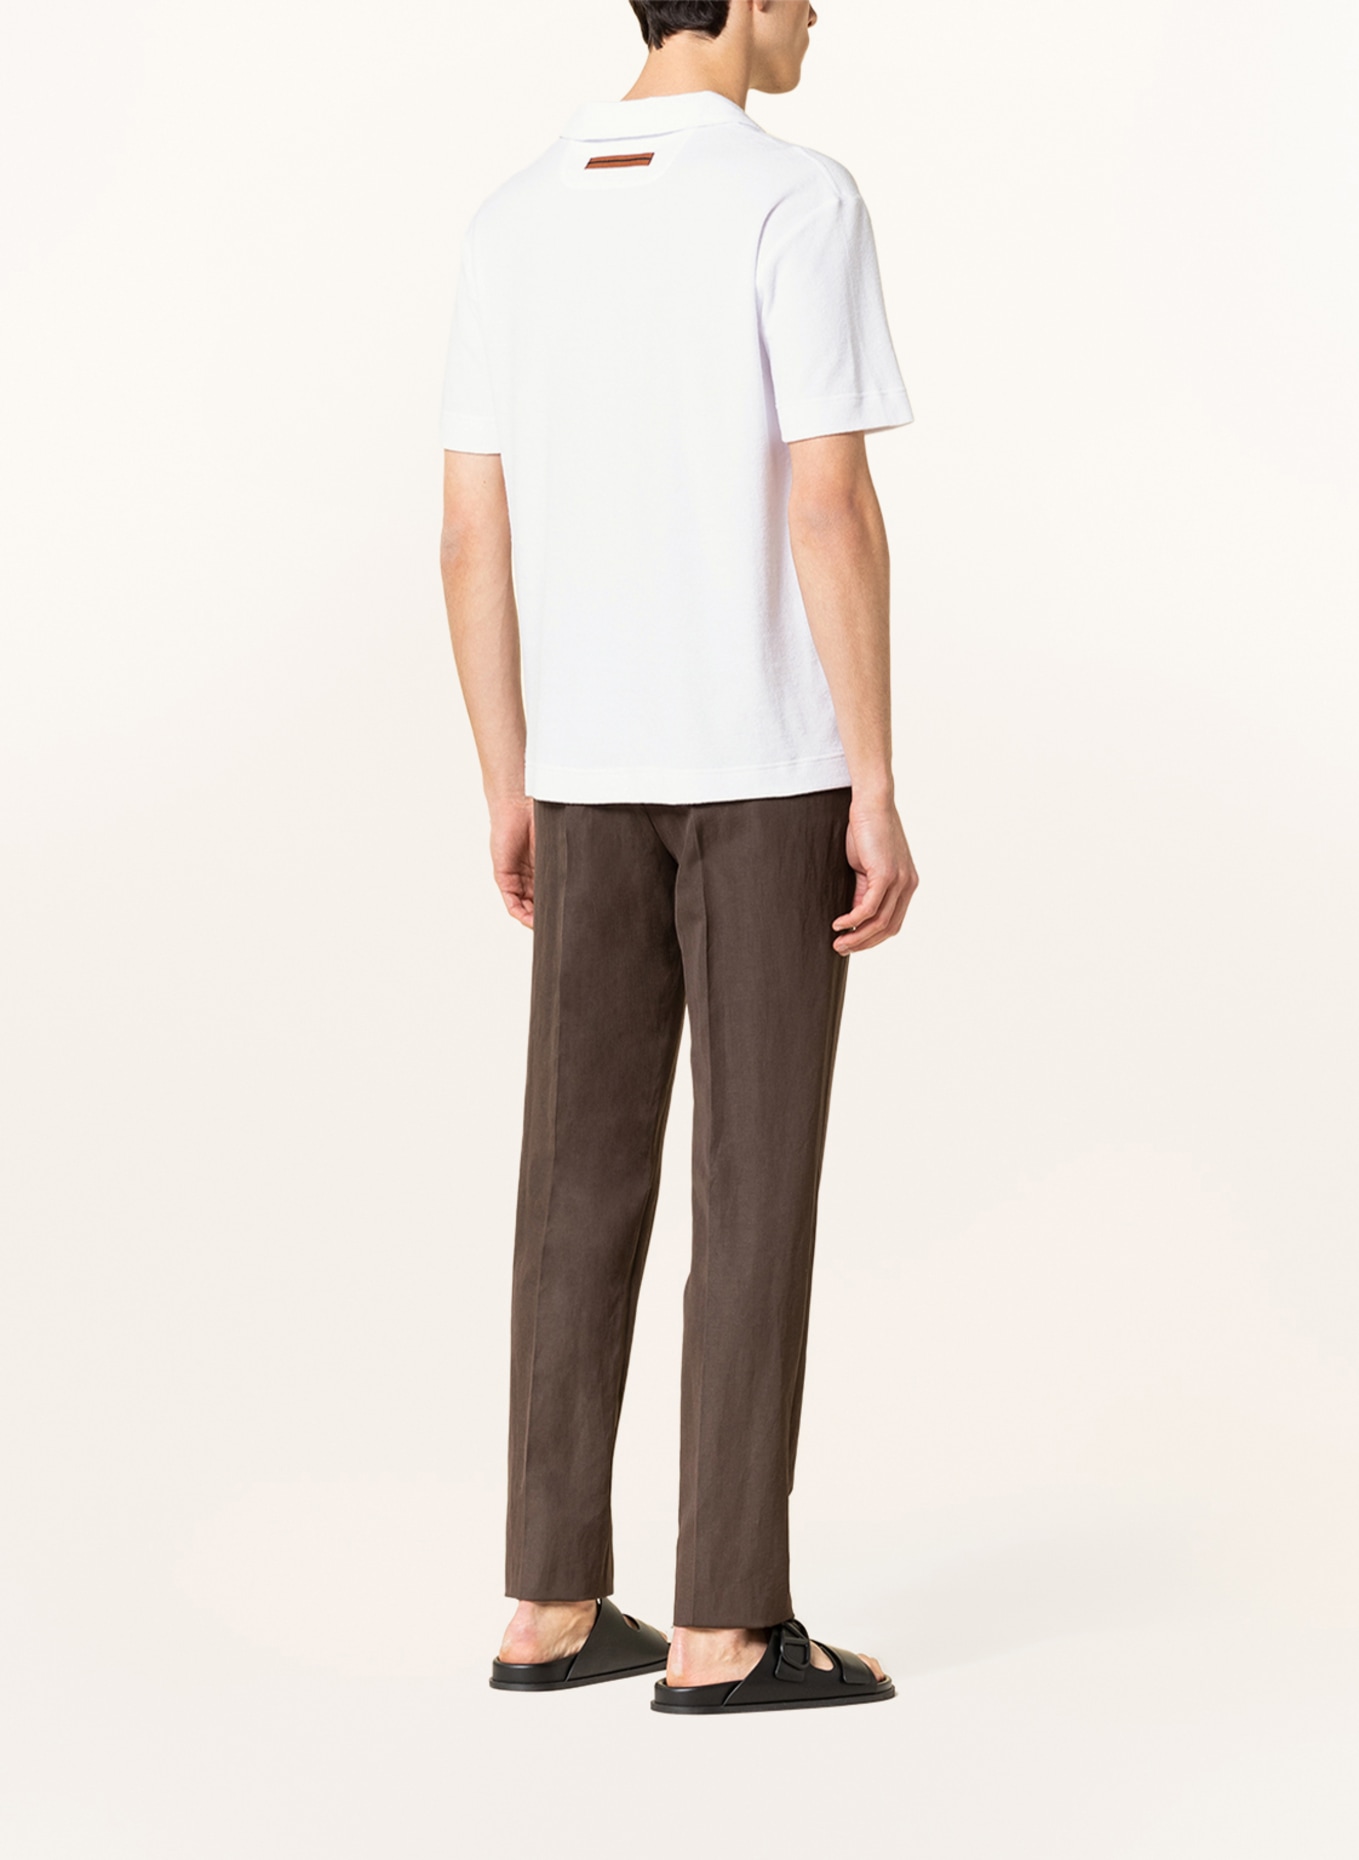 ZEGNA Terry cloth polo shirt, Color: WHITE (Image 3)